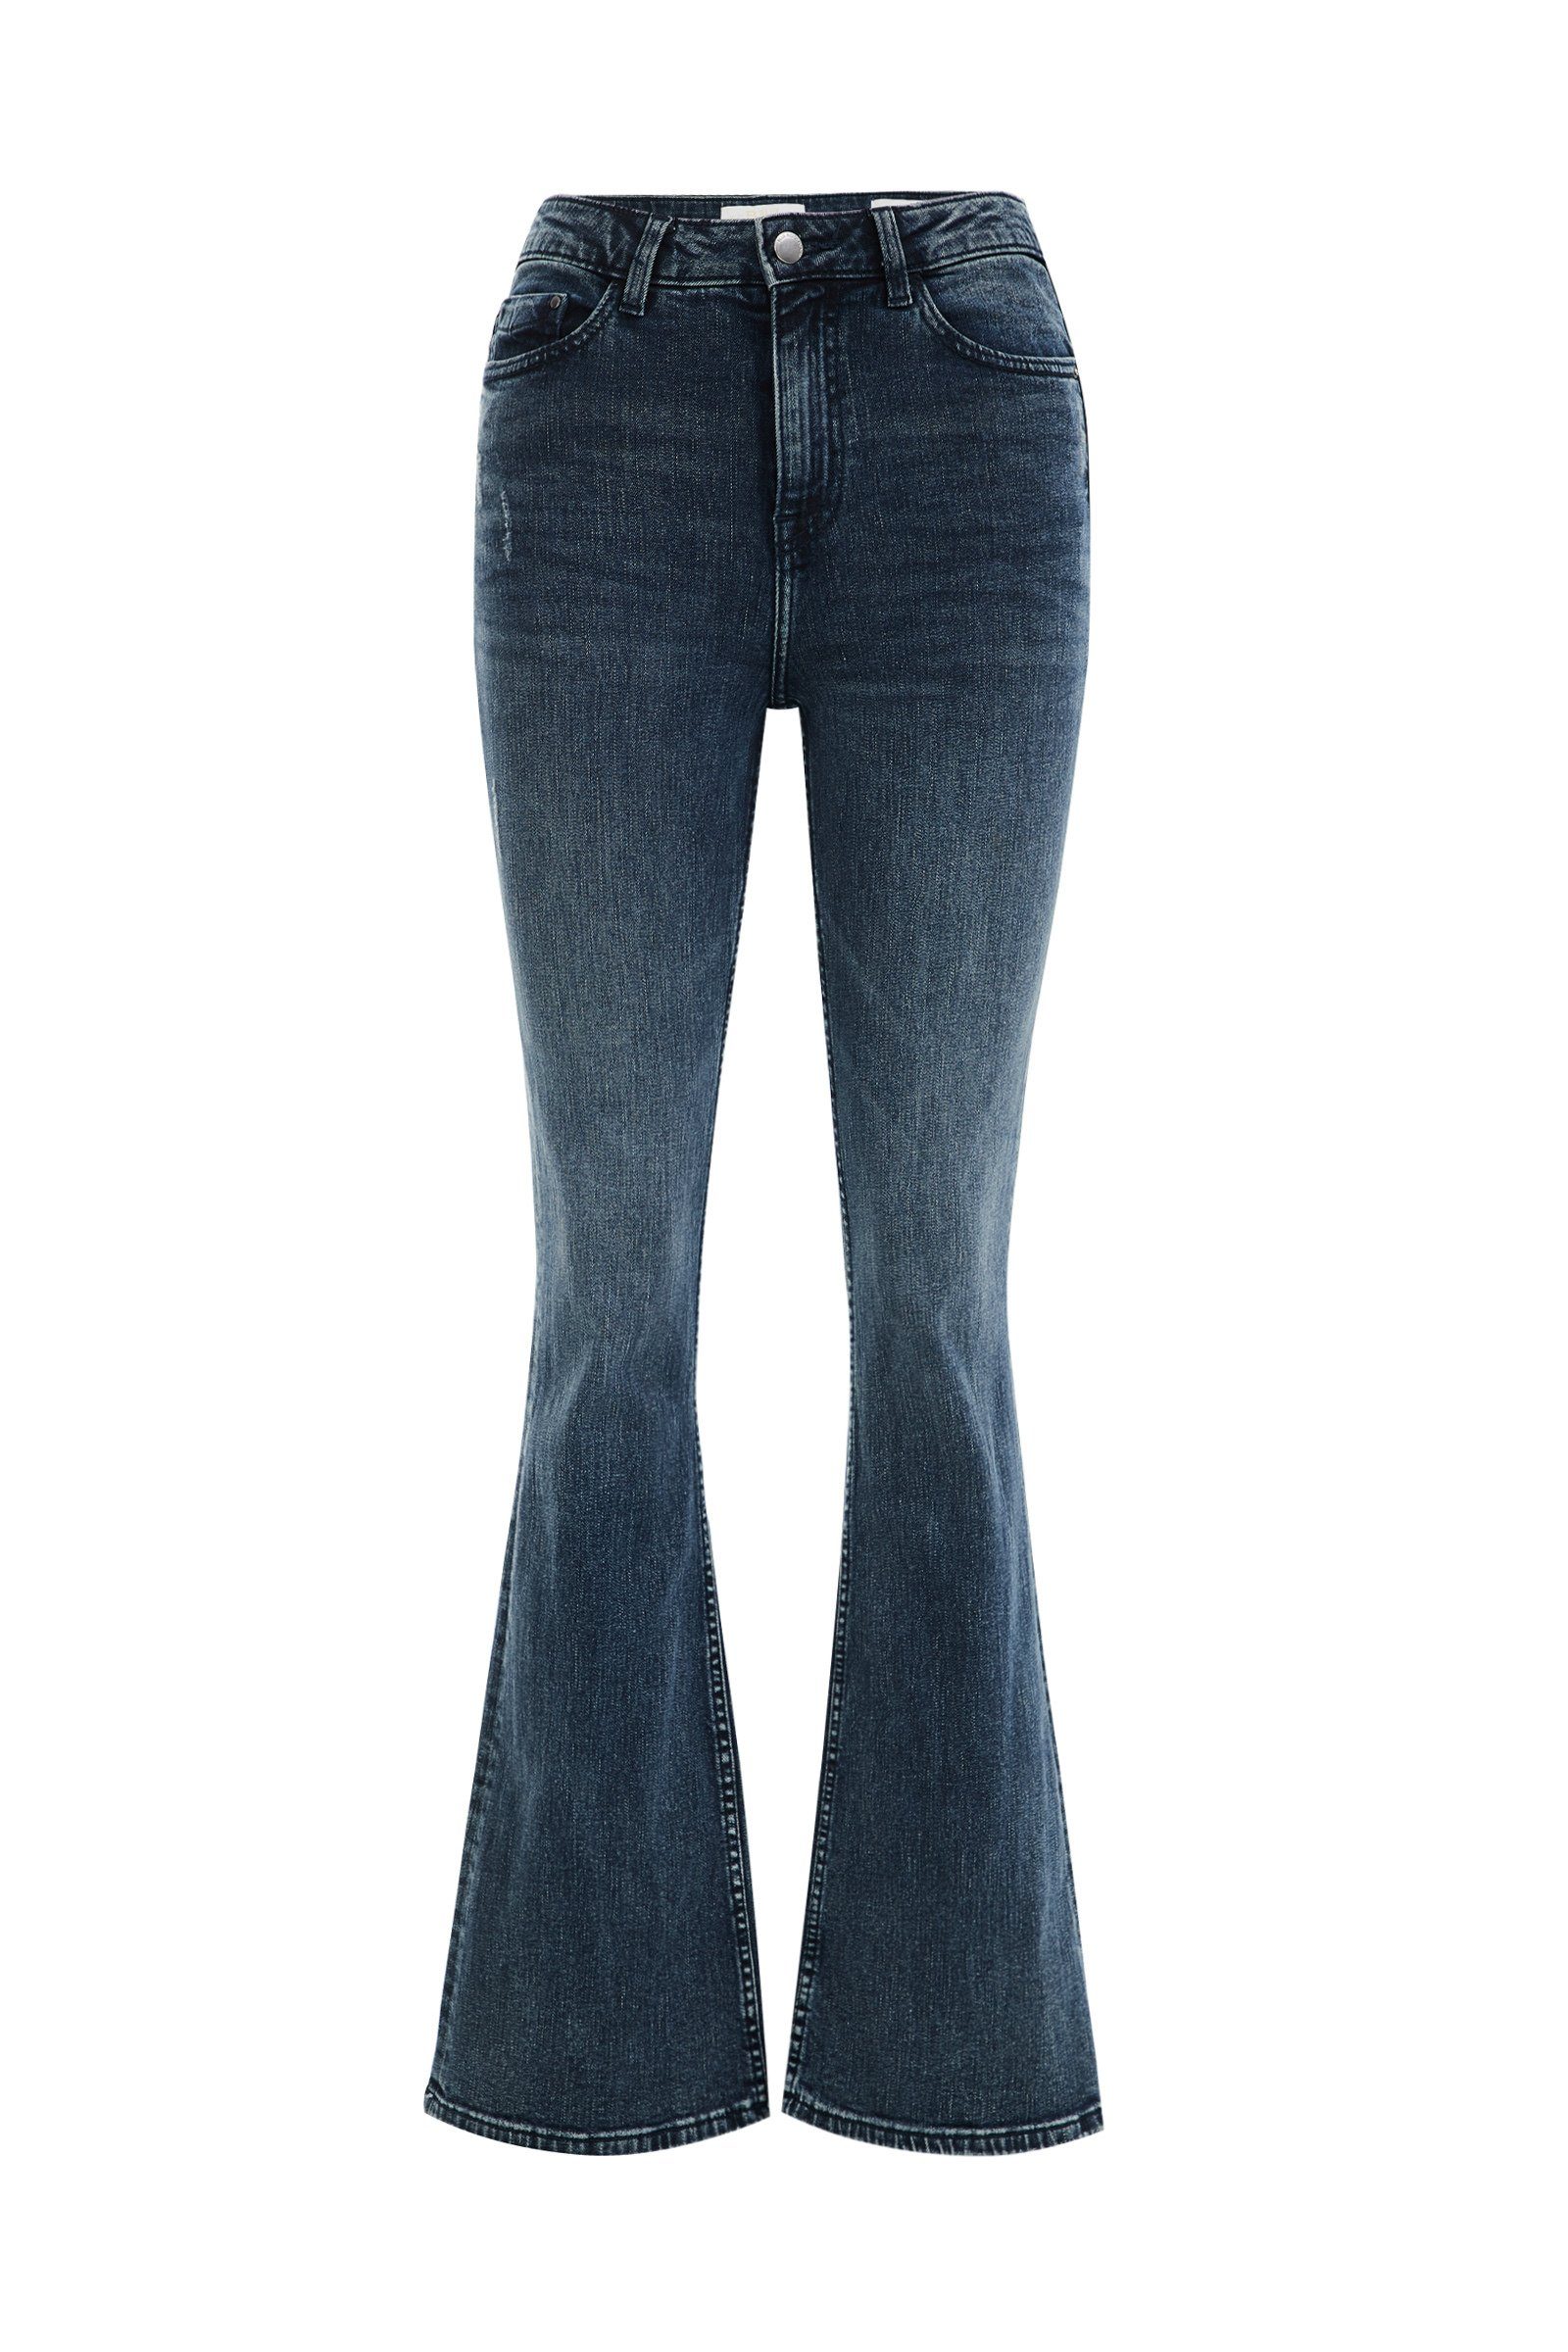 WE Fashion High-waist-Jeans, Damen-Flared-Jeans mit hoher Taille